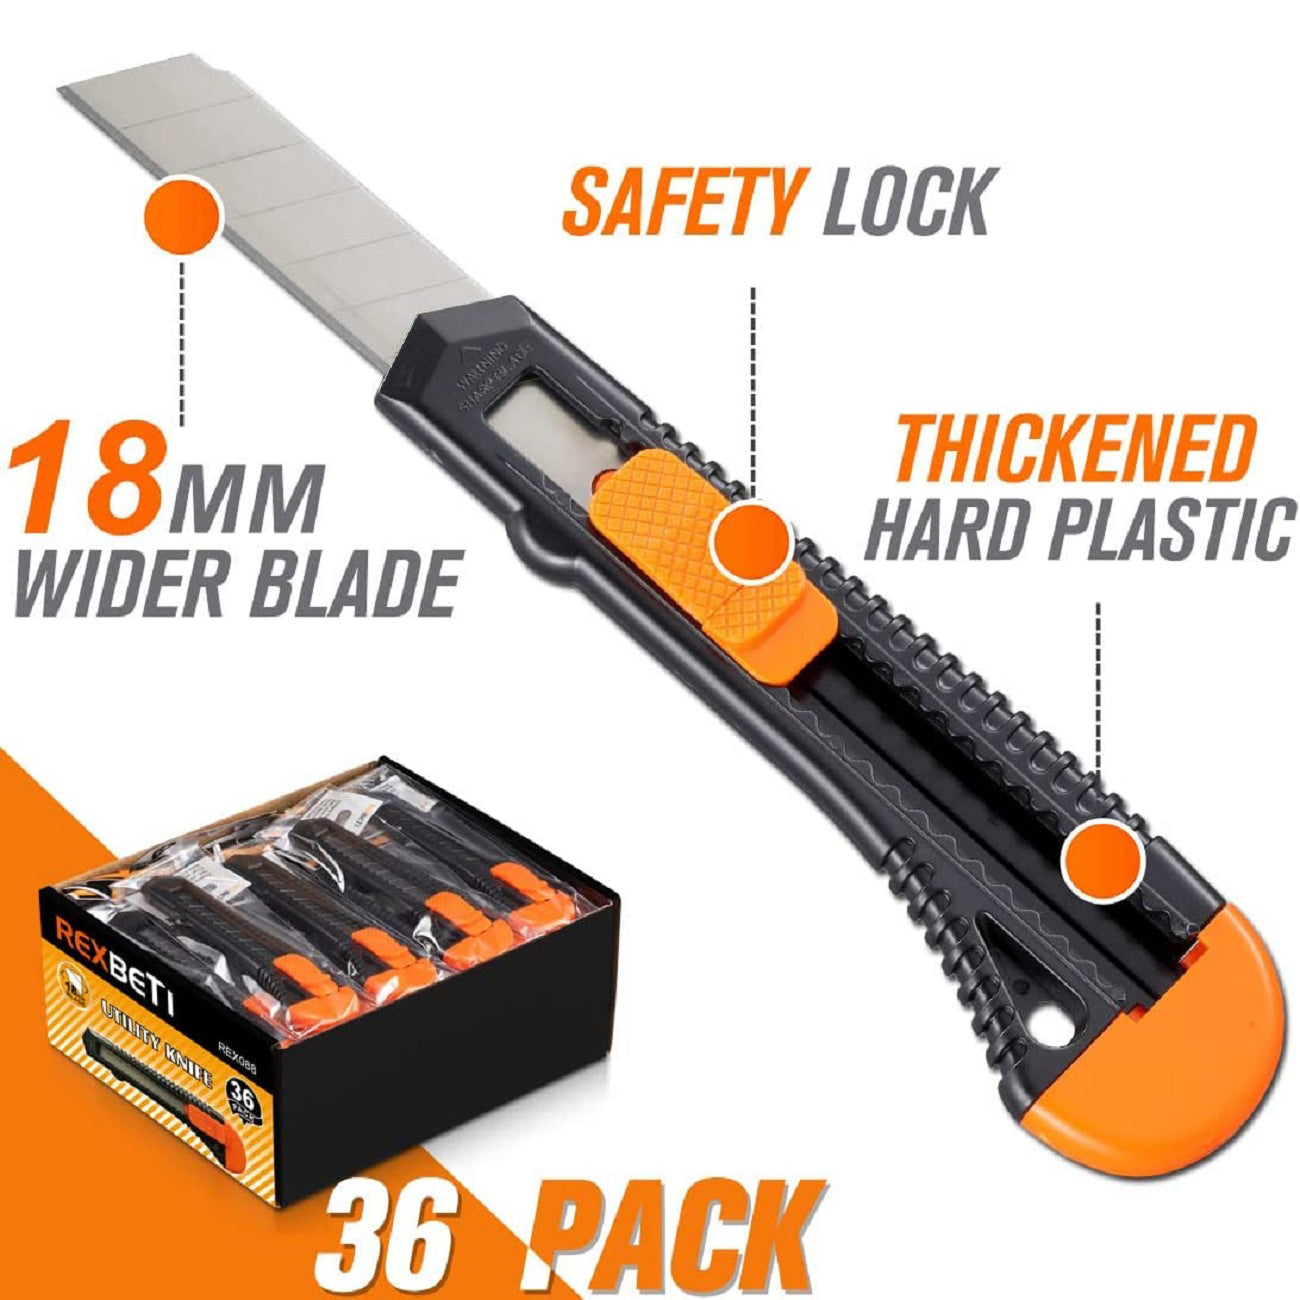 REXBETI 36 Pack Utility Knife